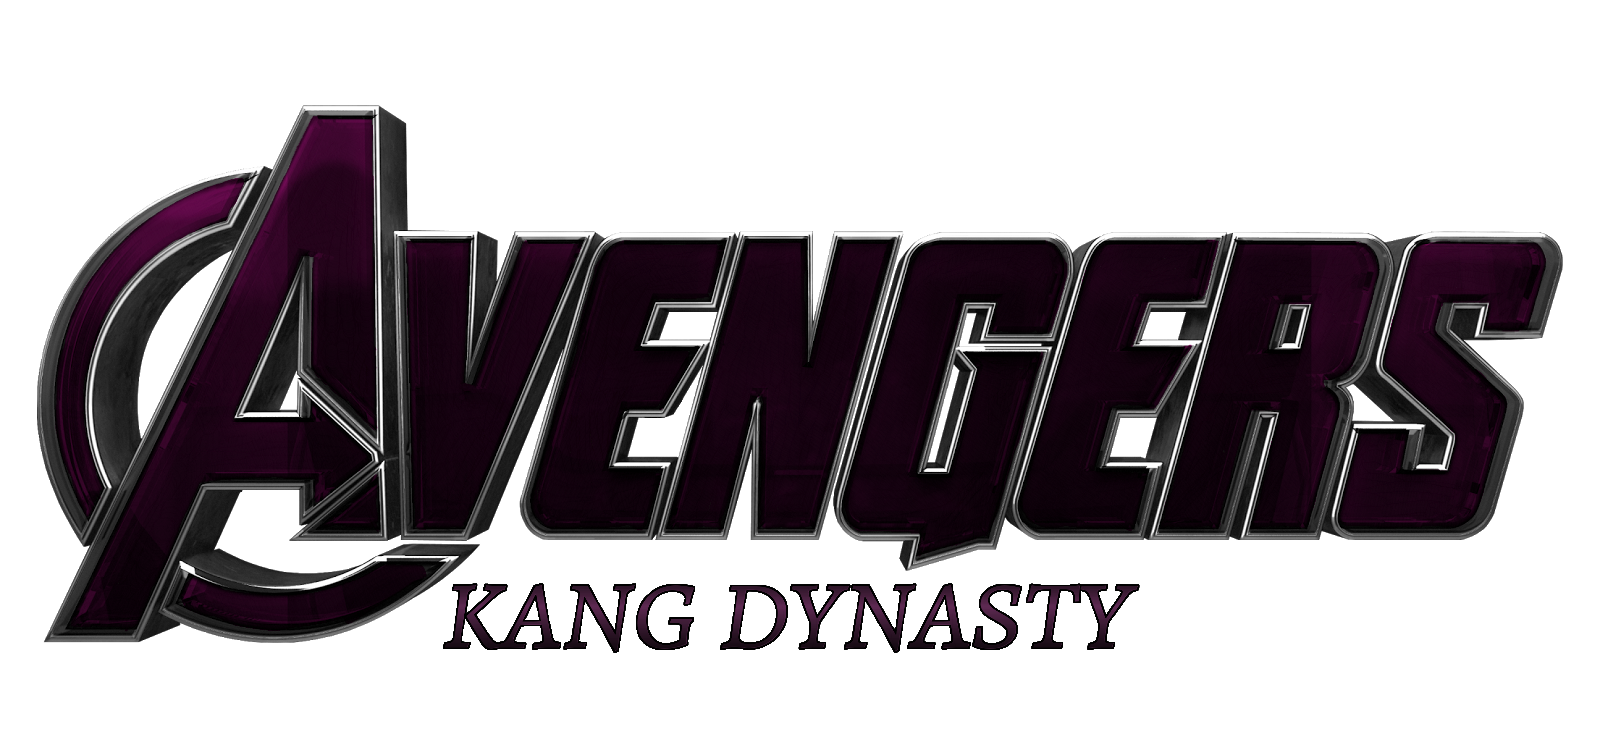 File:Avengers The Kang Dynasty Logo.svg - Wikimedia Commons